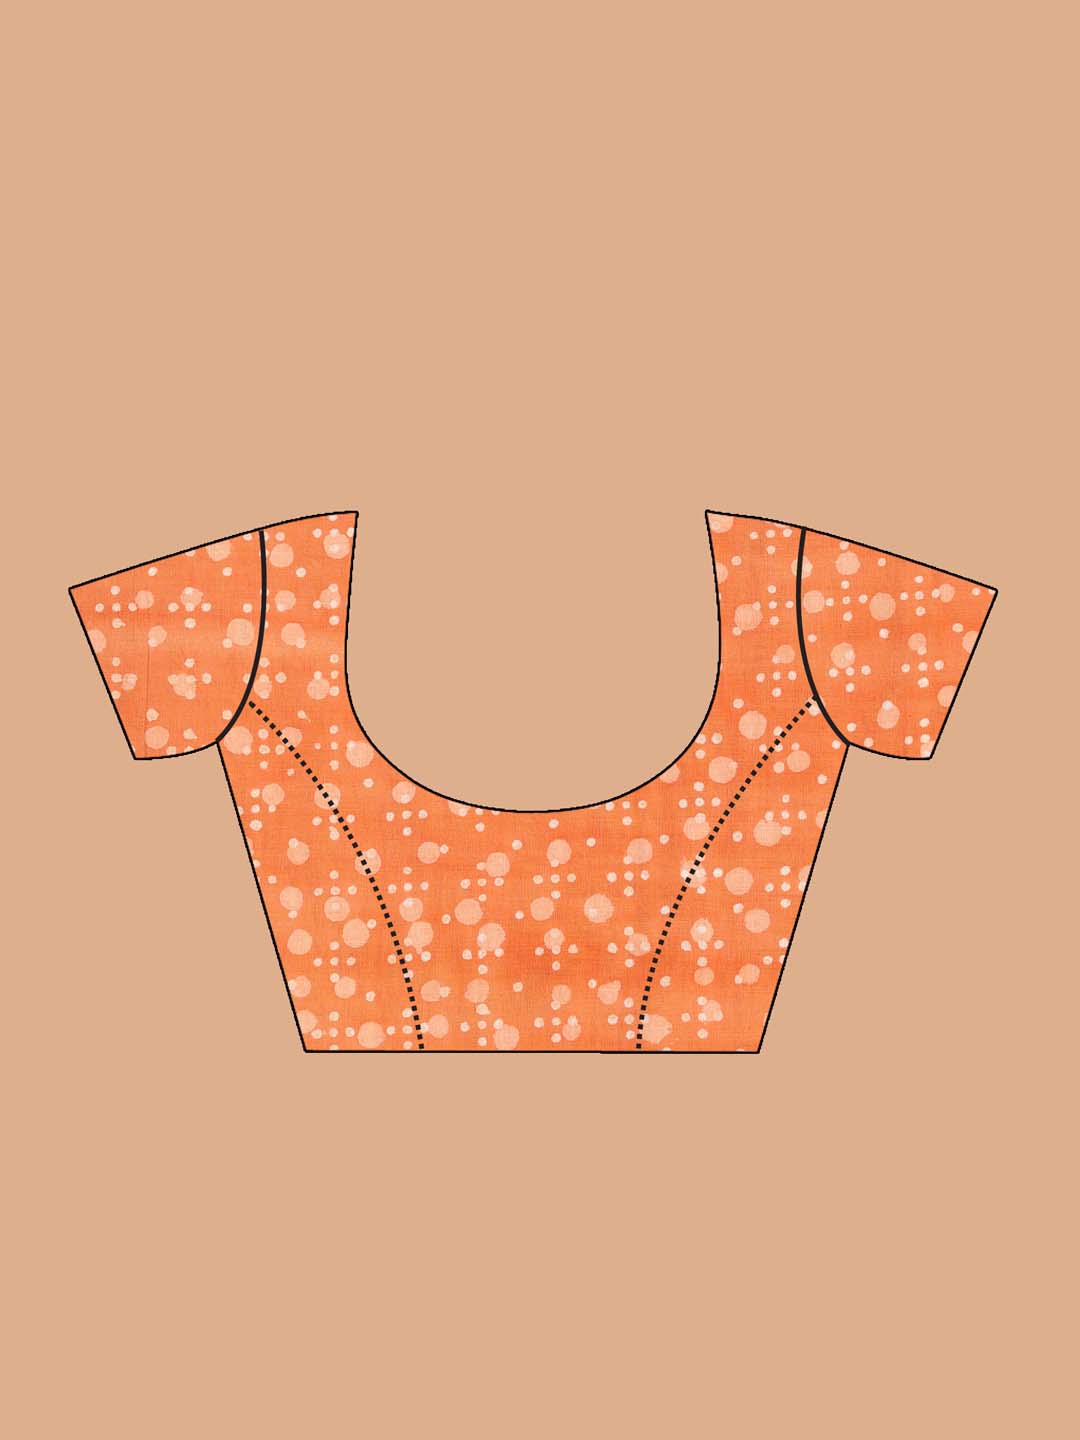 Indethnic Printed Cotton Blend Saree in orange - Blouse Piece View